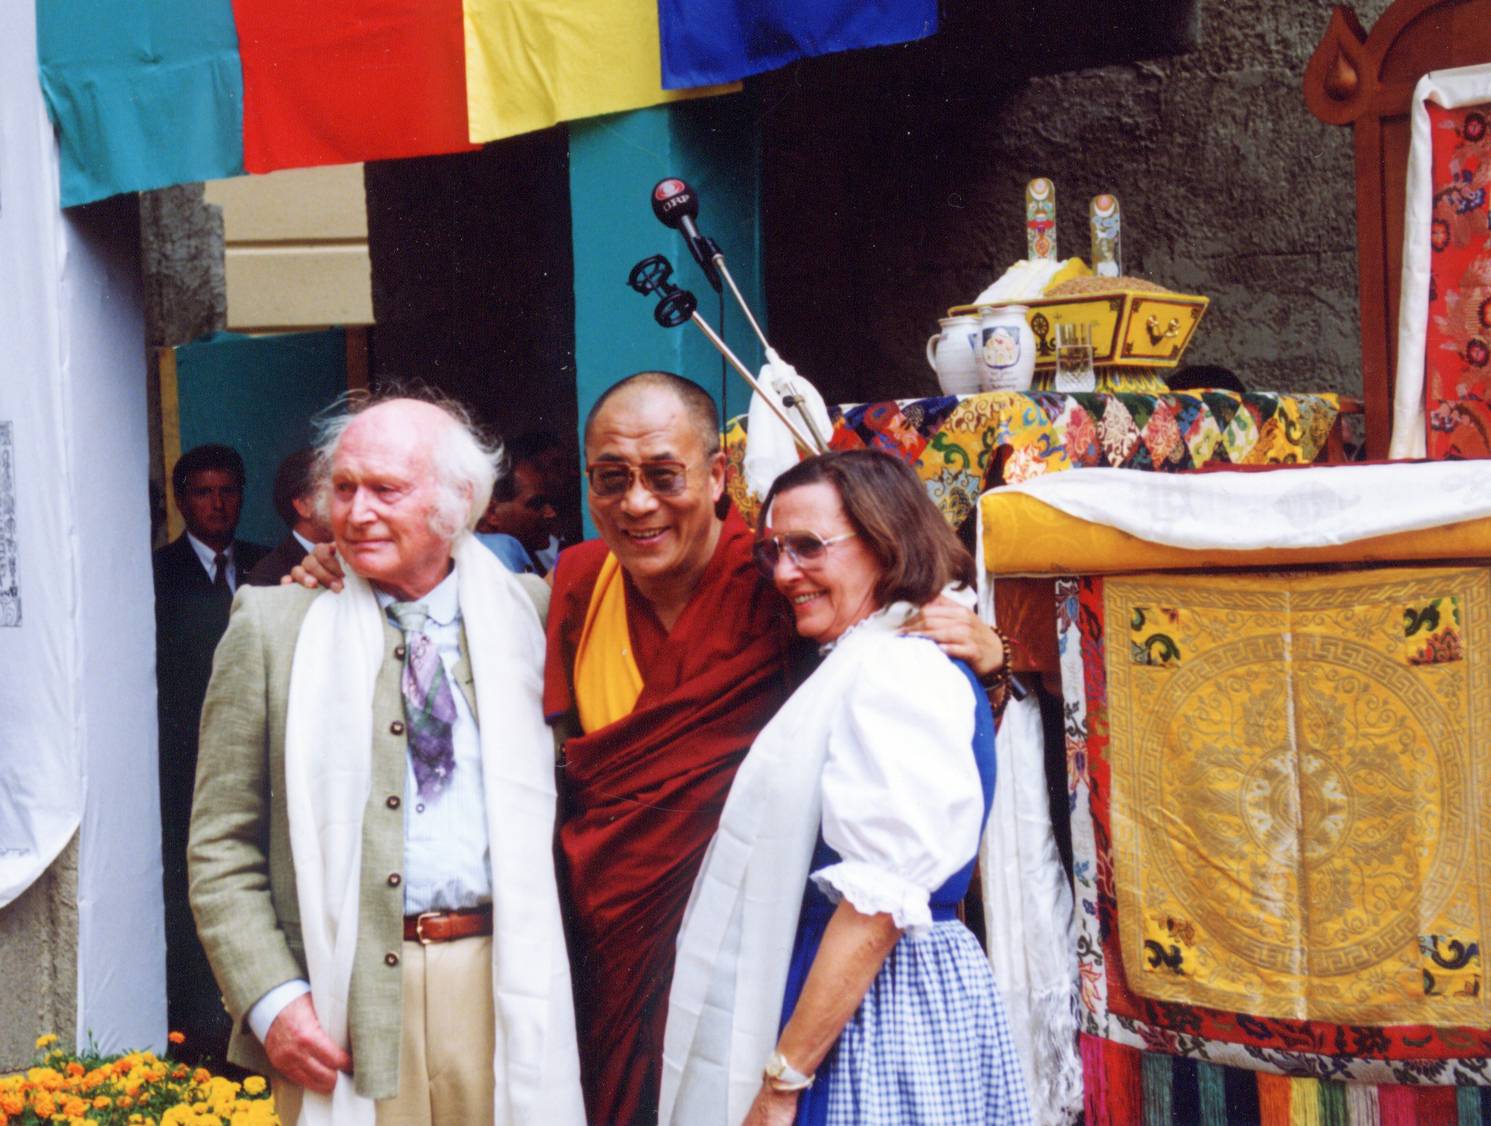 1992 segnete der Dalai Lama den buddhistischen Gebetsraum im Harrer Museums, zum 90. Geburtstag Harrers 2002 den neugebauten tibetischen Pilgerpfad Lingkhor.